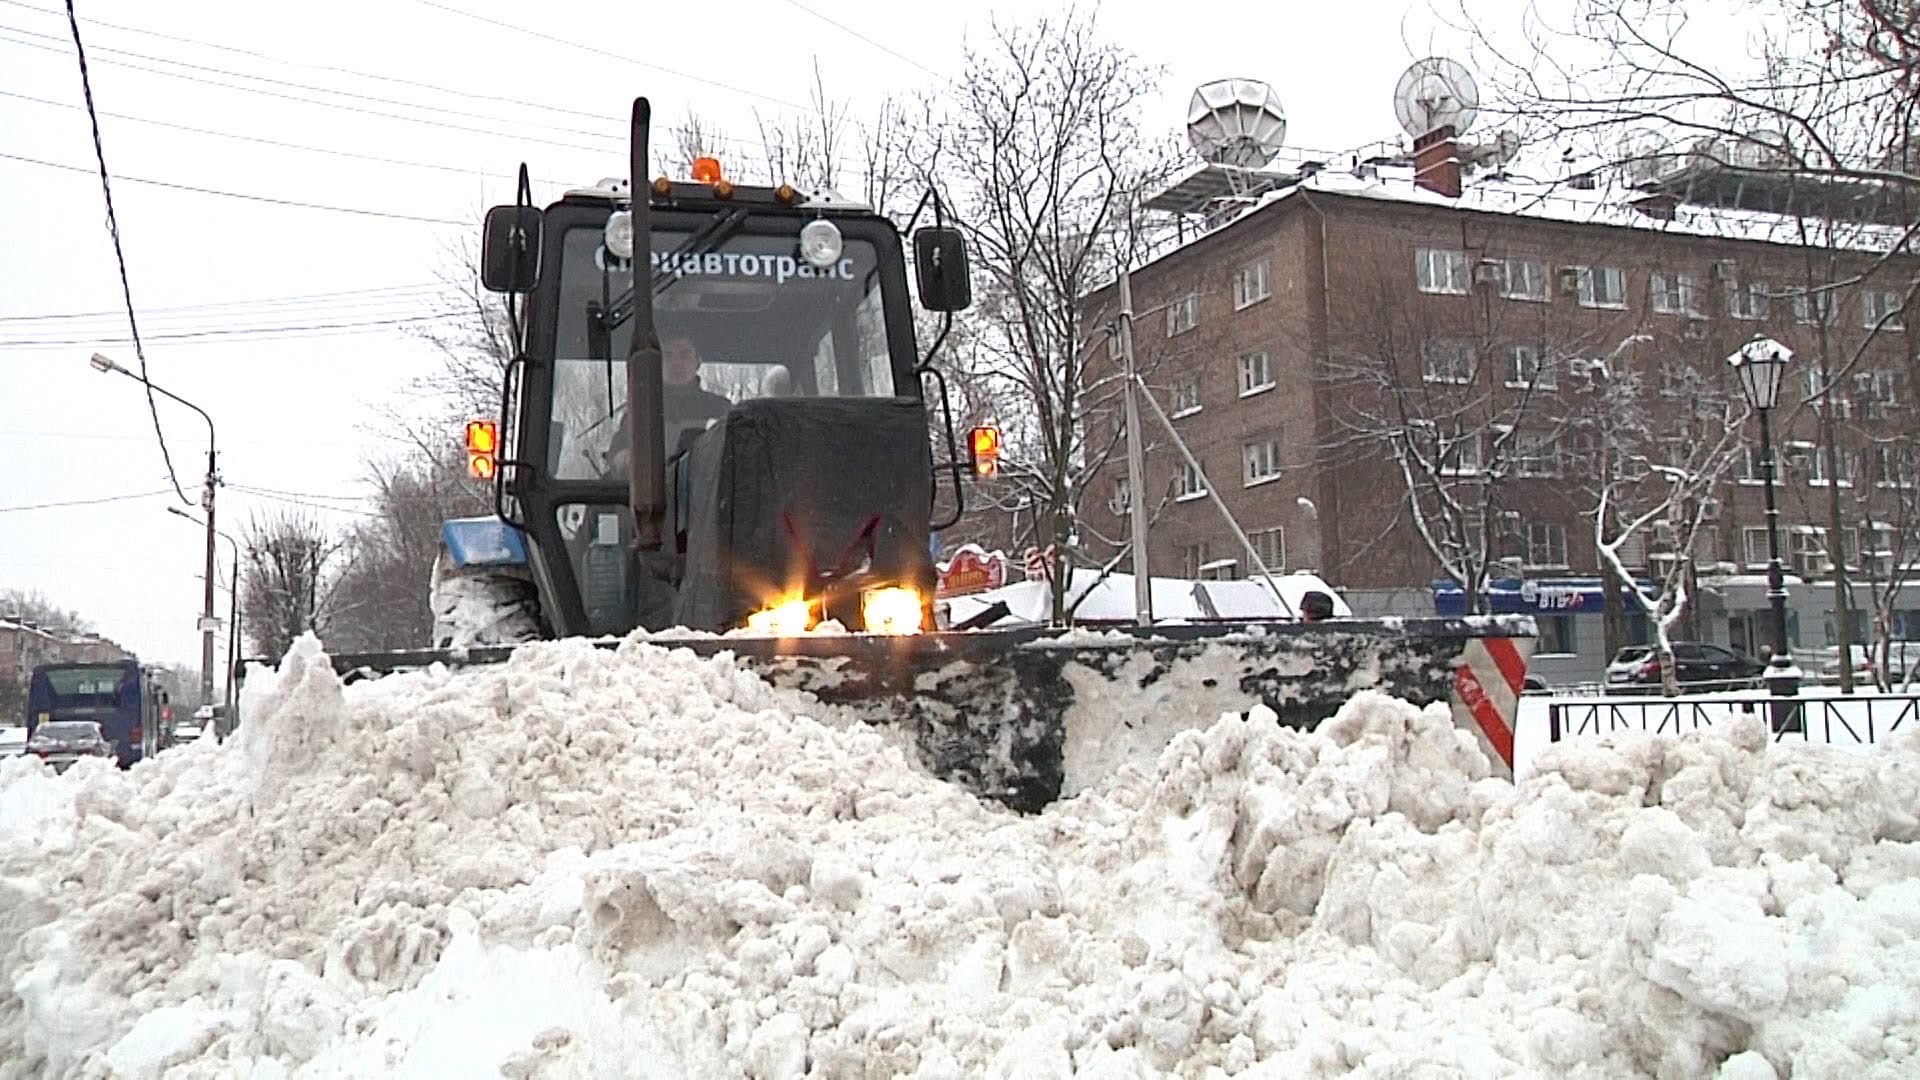 Уборка снега в снт. Уборка улиц Череповец. Уборка снега. Трактор для уборки снега. Уборка снега в городе.